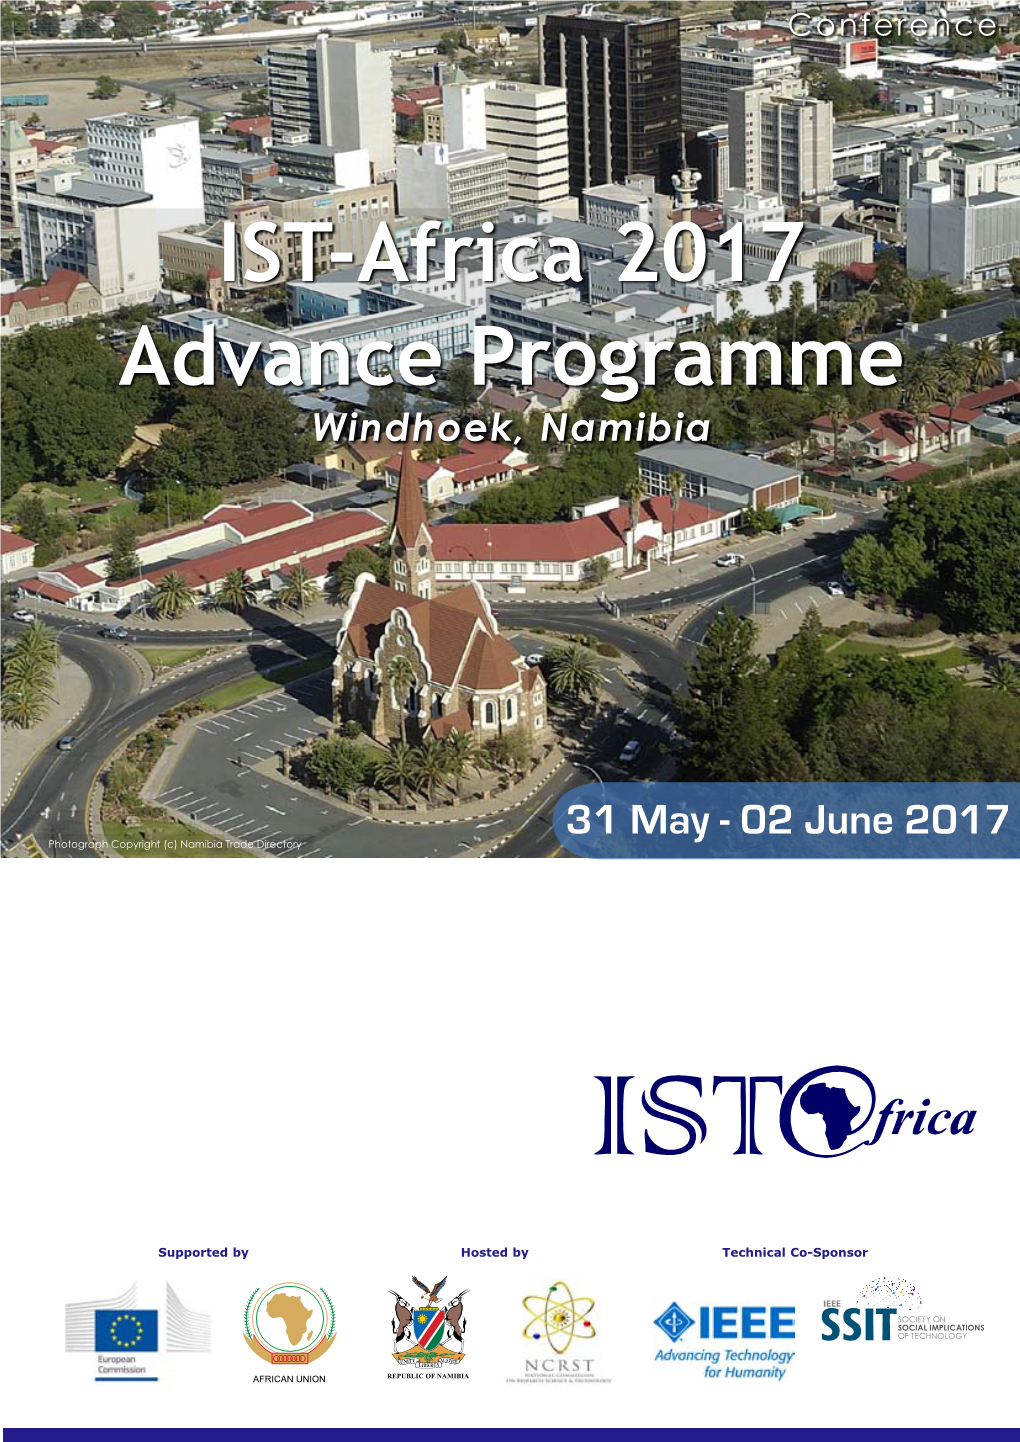 IST-Africa 2017 Advance Programme Windhoek, Namibia